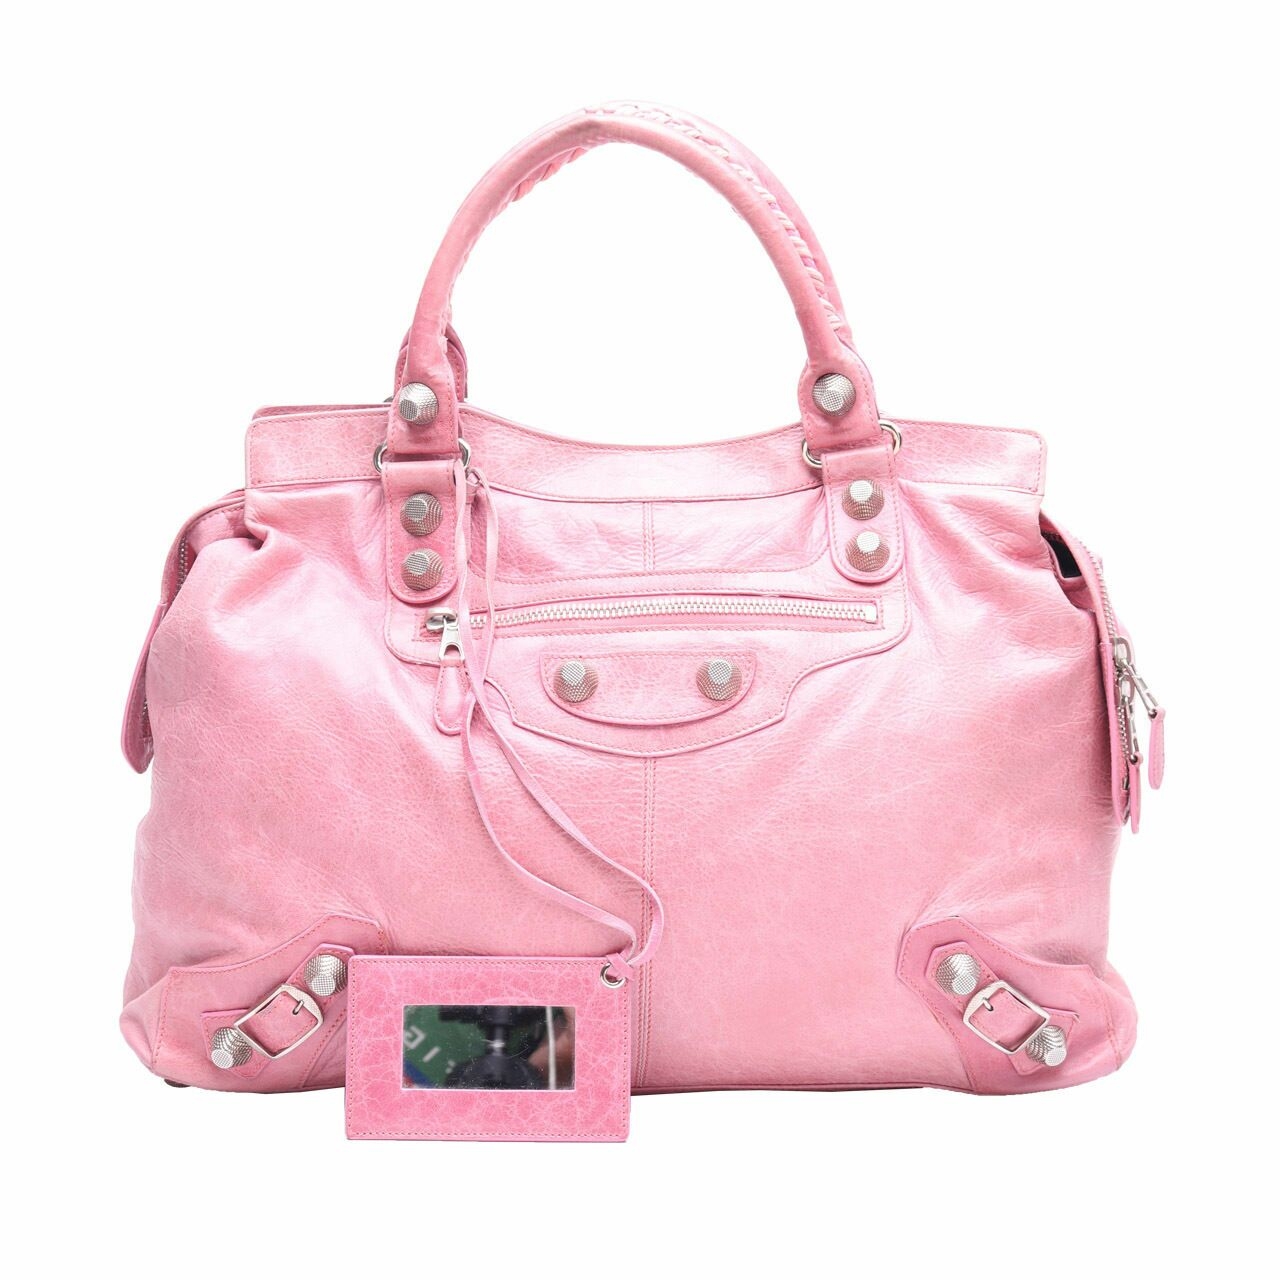 Balenciaga Pink Leather Giant Handbag